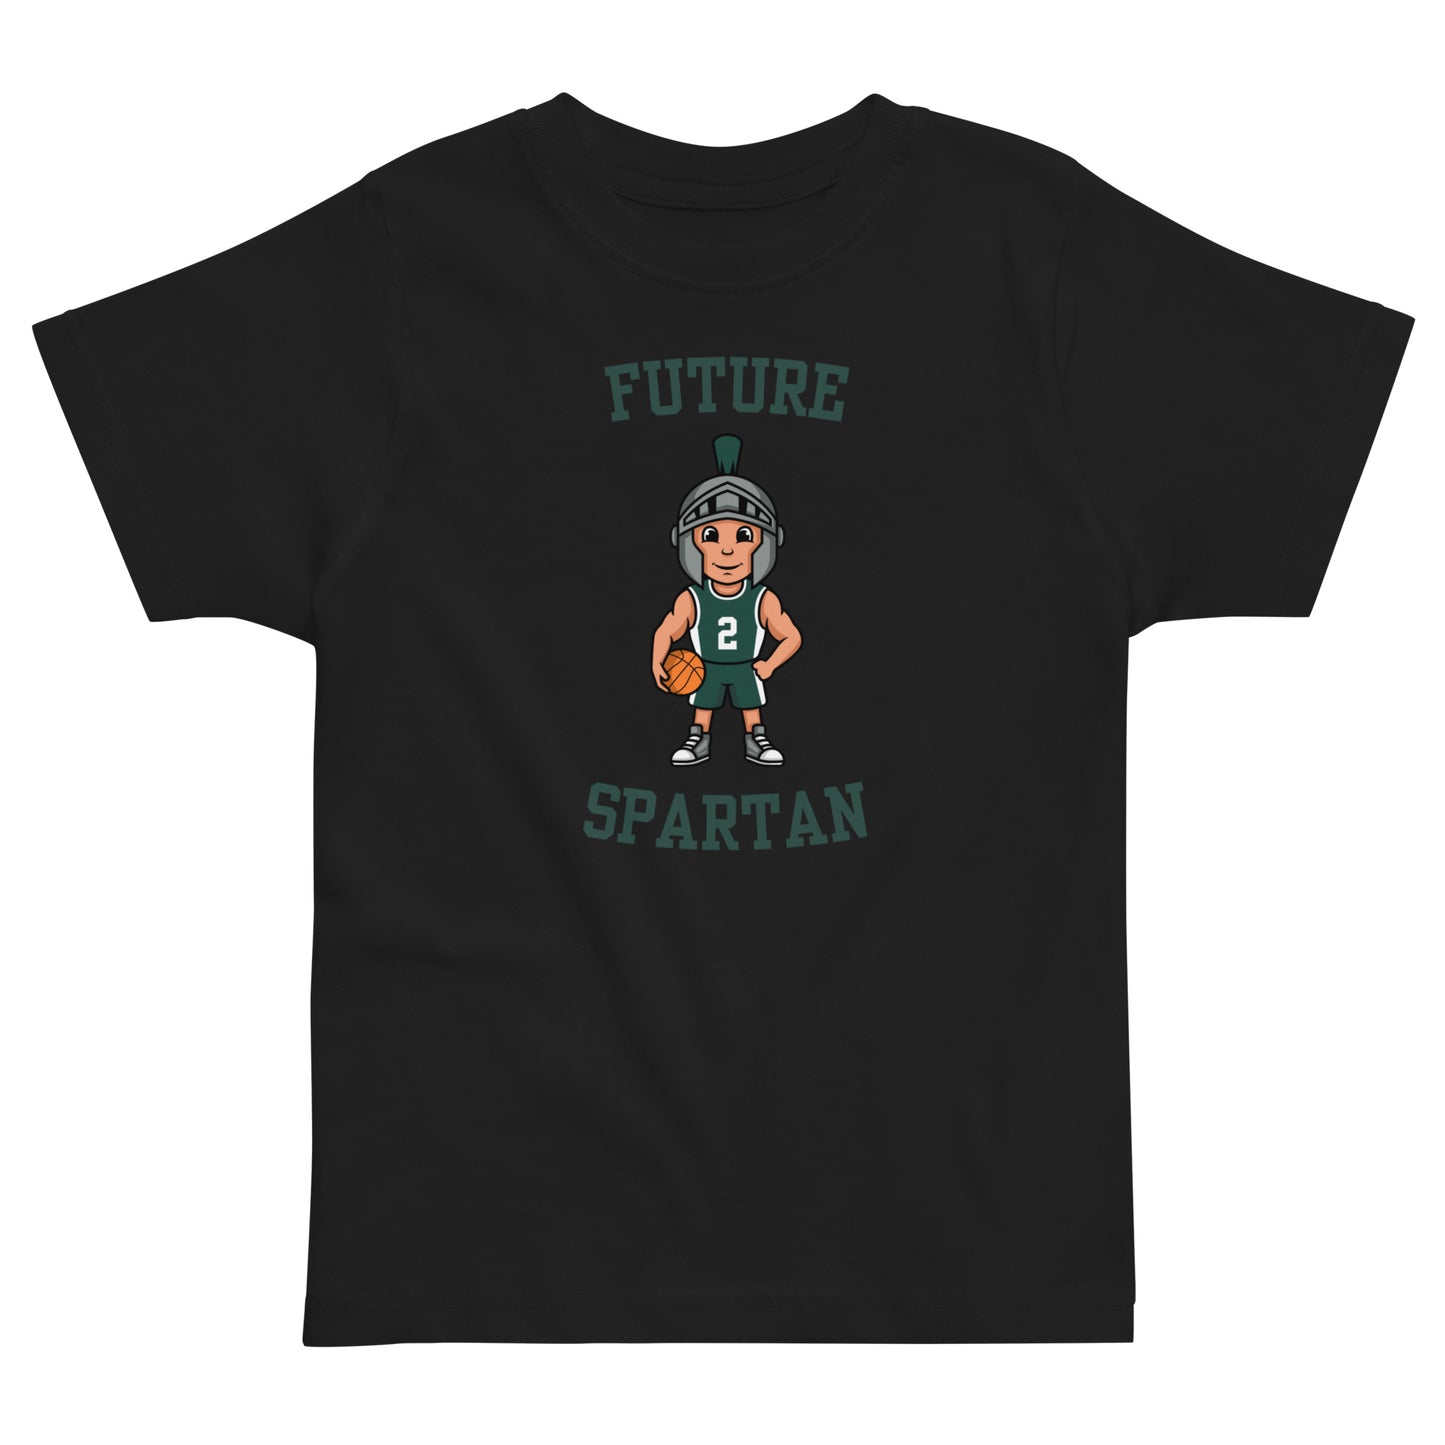 Future Spartan Toddler jersey t-shirt